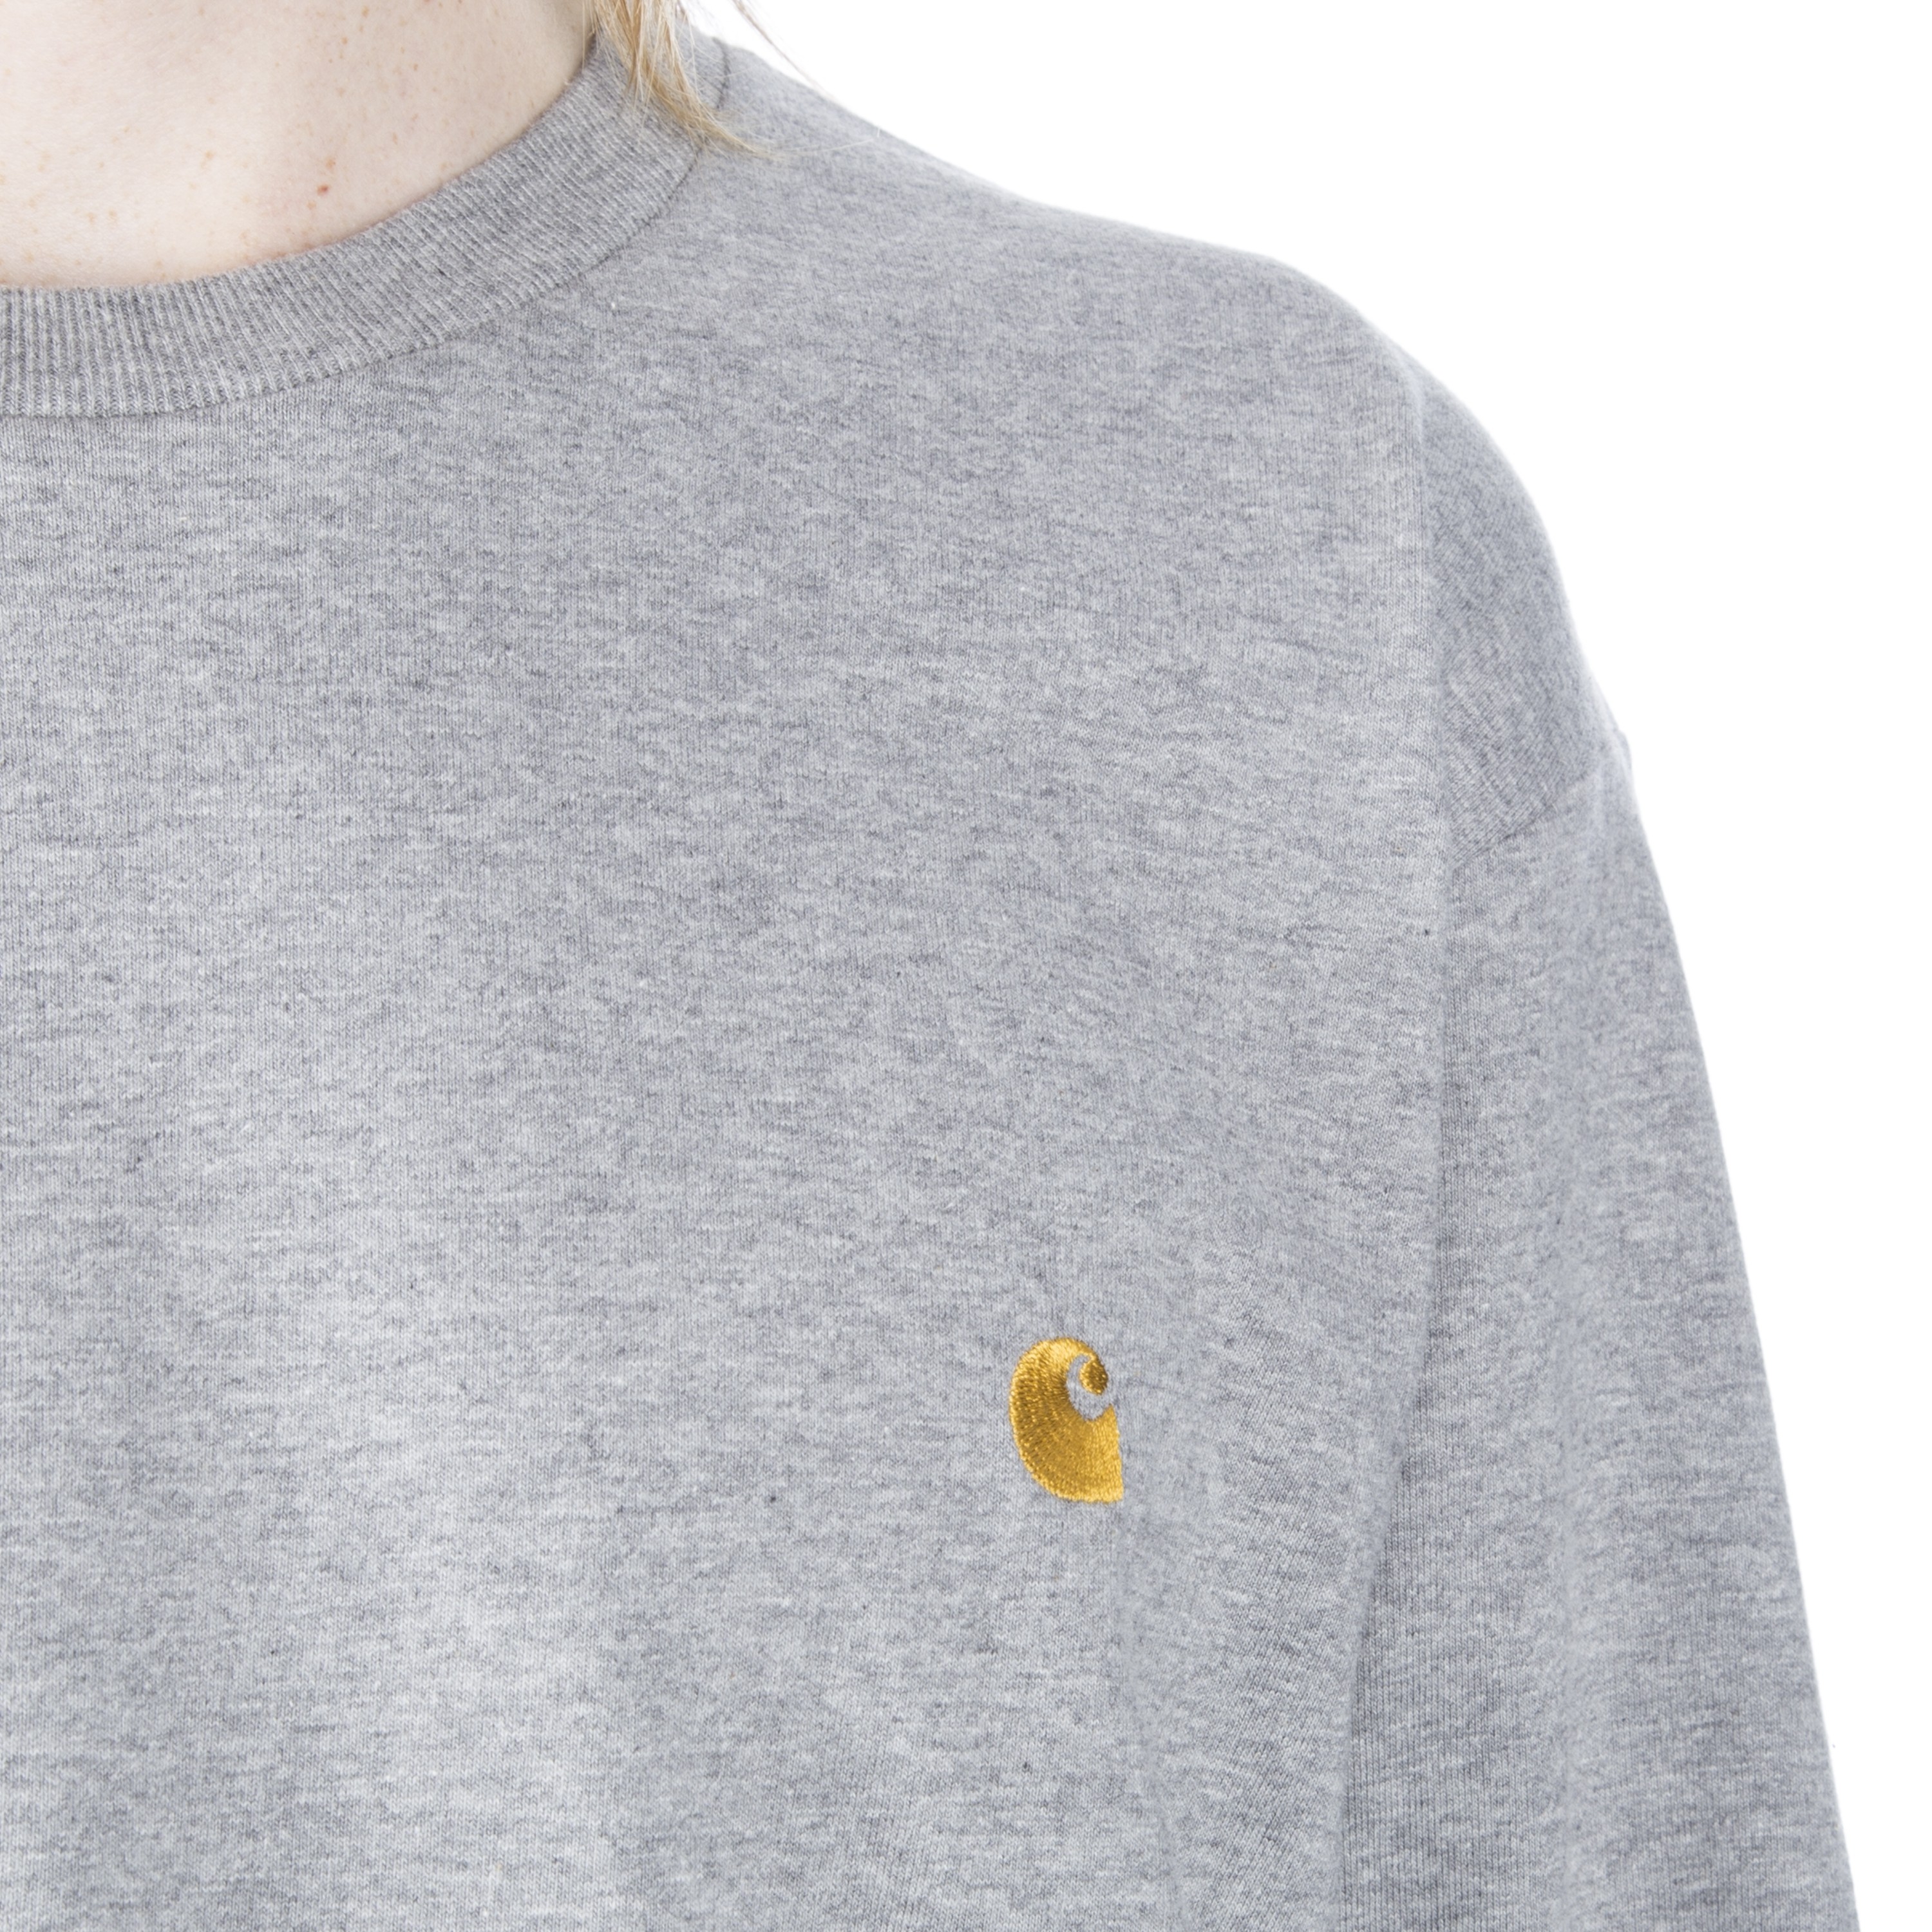 Carhartt Chase Long Sleeve T-Shirt (Grey Heather/Gold) - Consortium.